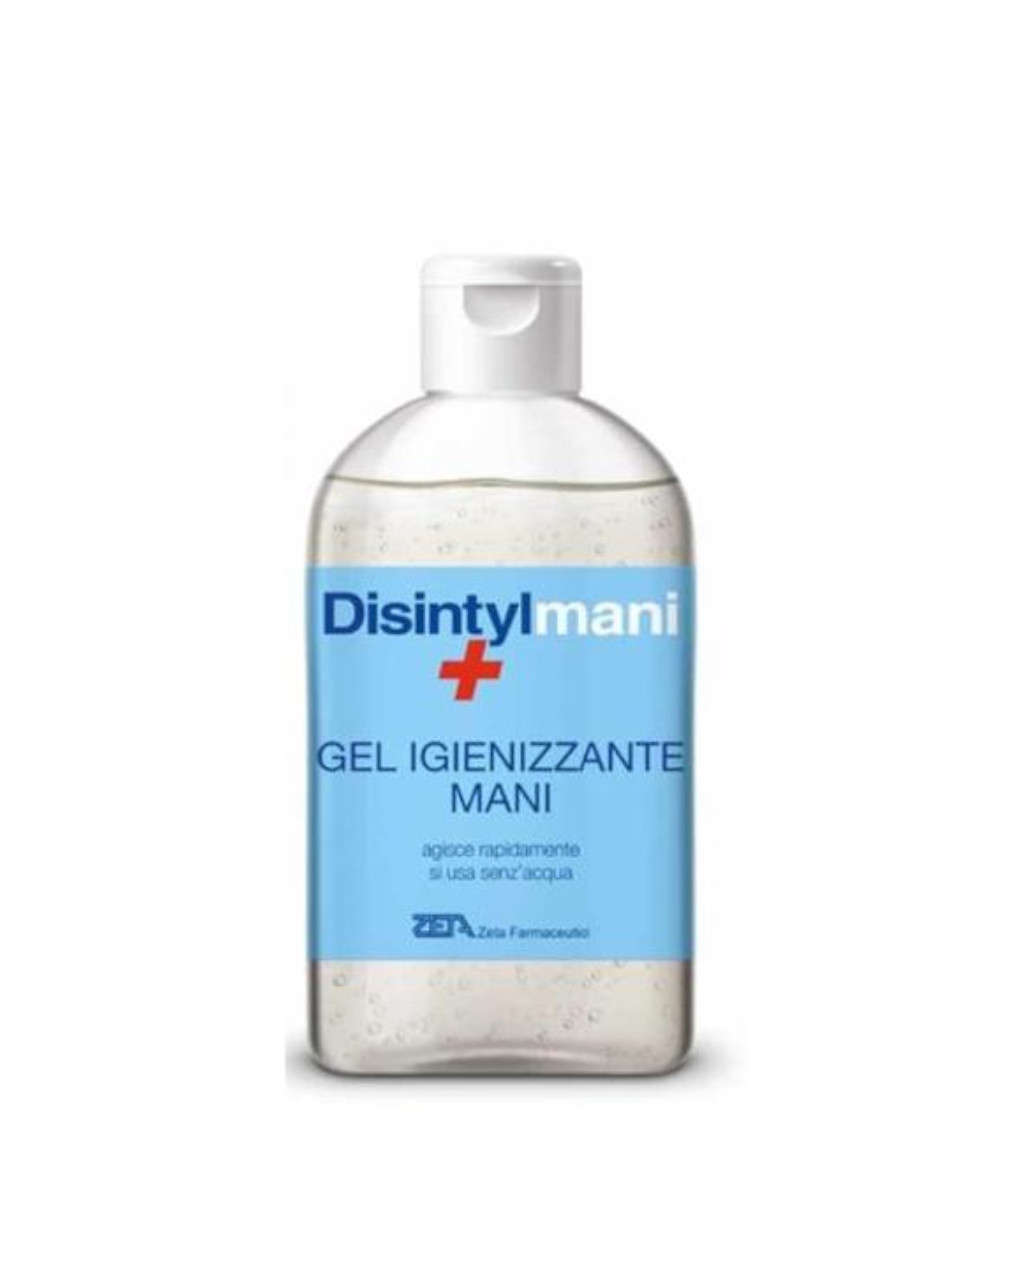 Disintyl mani gel igienizzante 500 ml - Disintyl